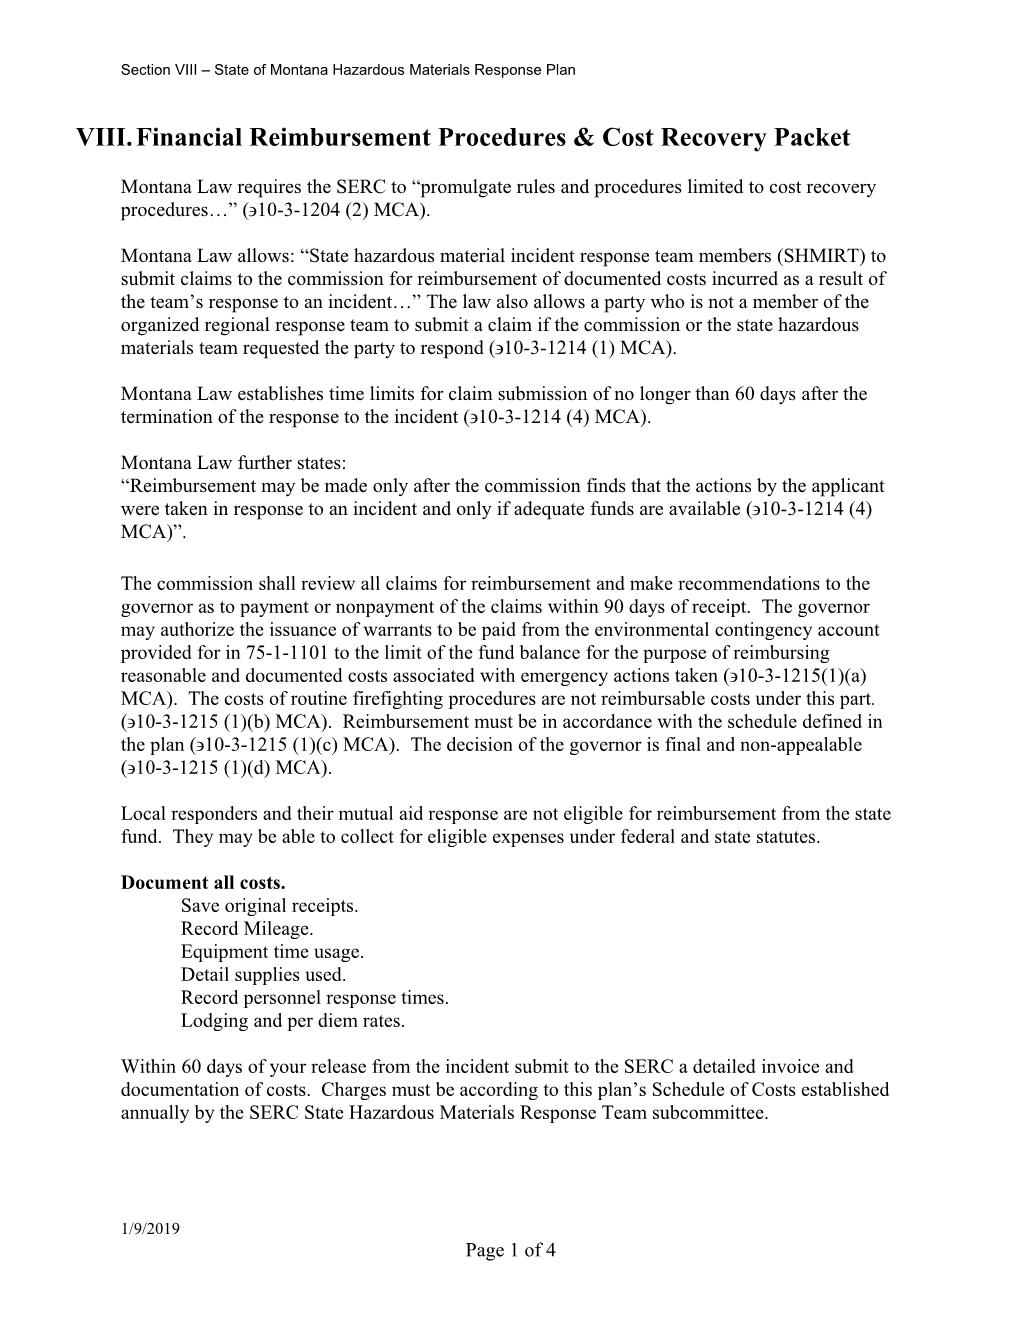 Section VIII State of Montana Hazardous Materials Response Plan